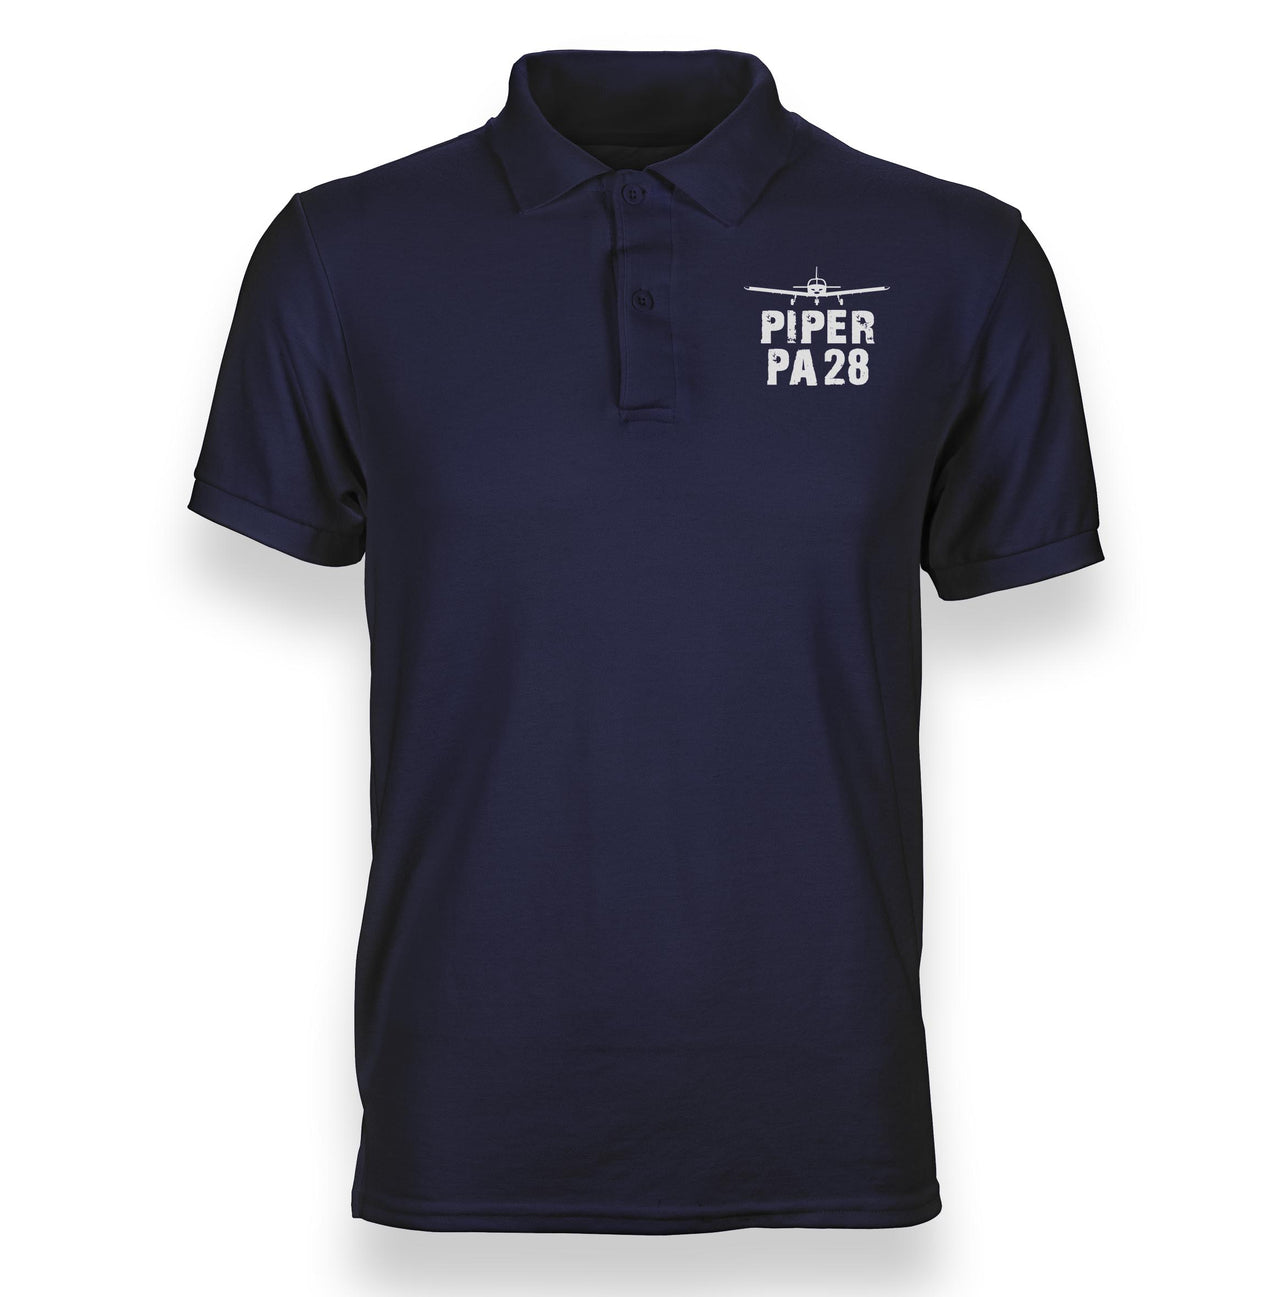 Piper PA28 & Plane Designed Polo T-Shirts